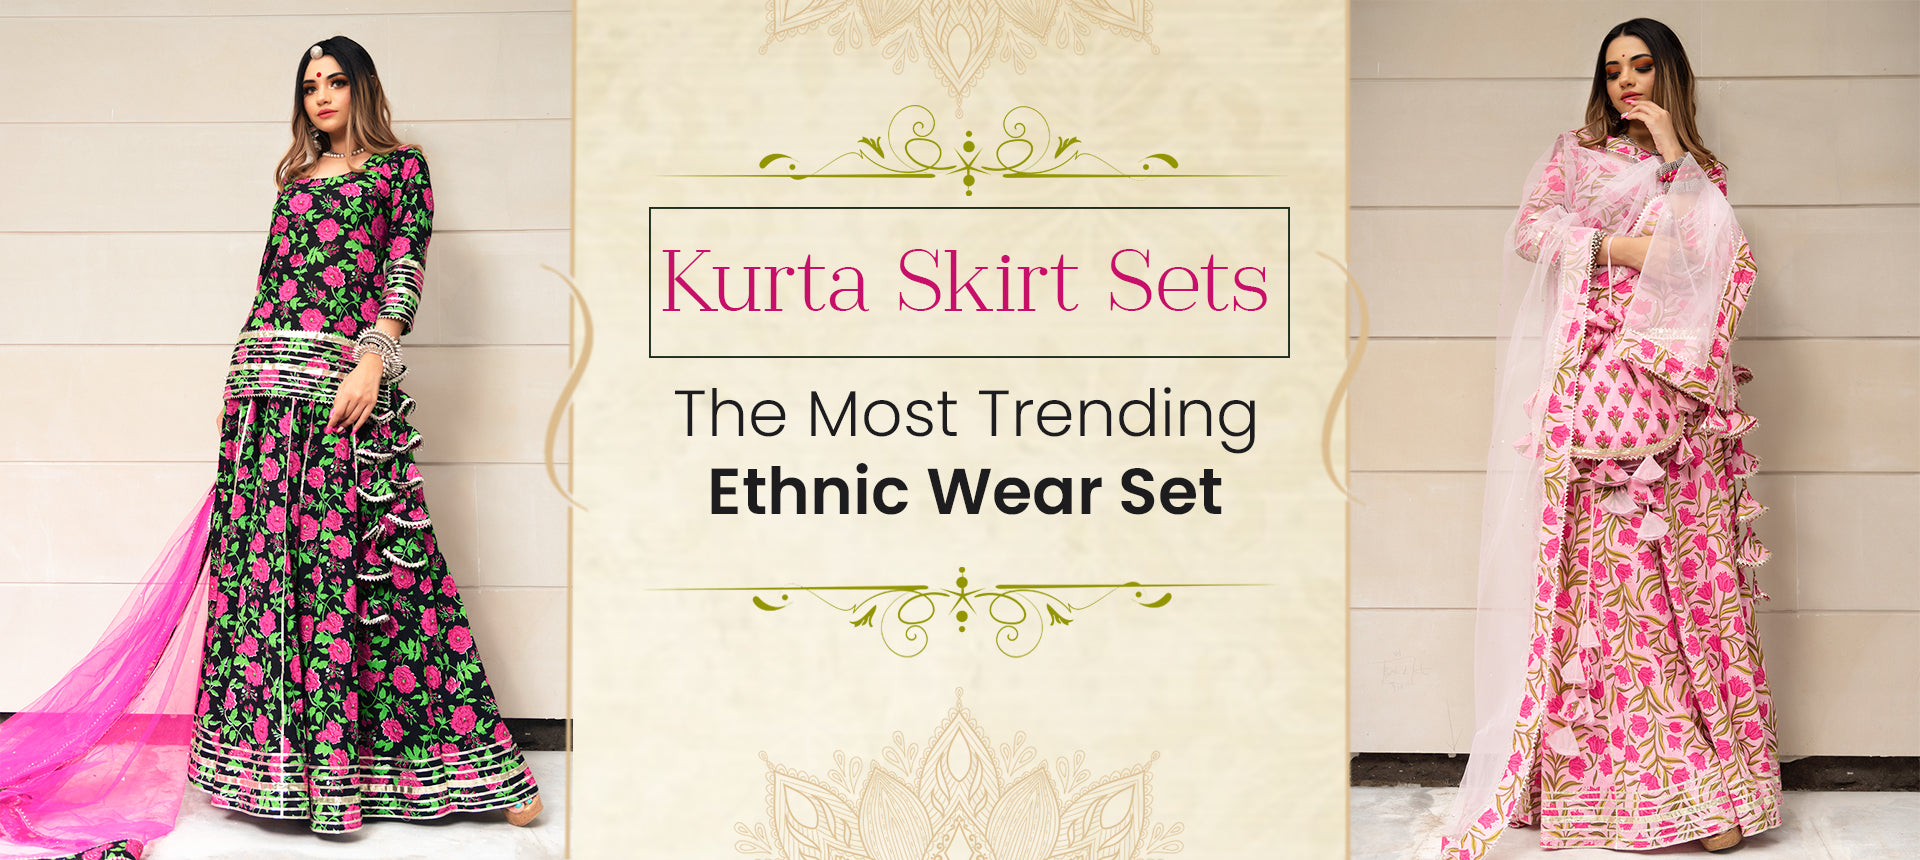 Kurta Skirt Sets: The Most Trending Ethnic Wear Set